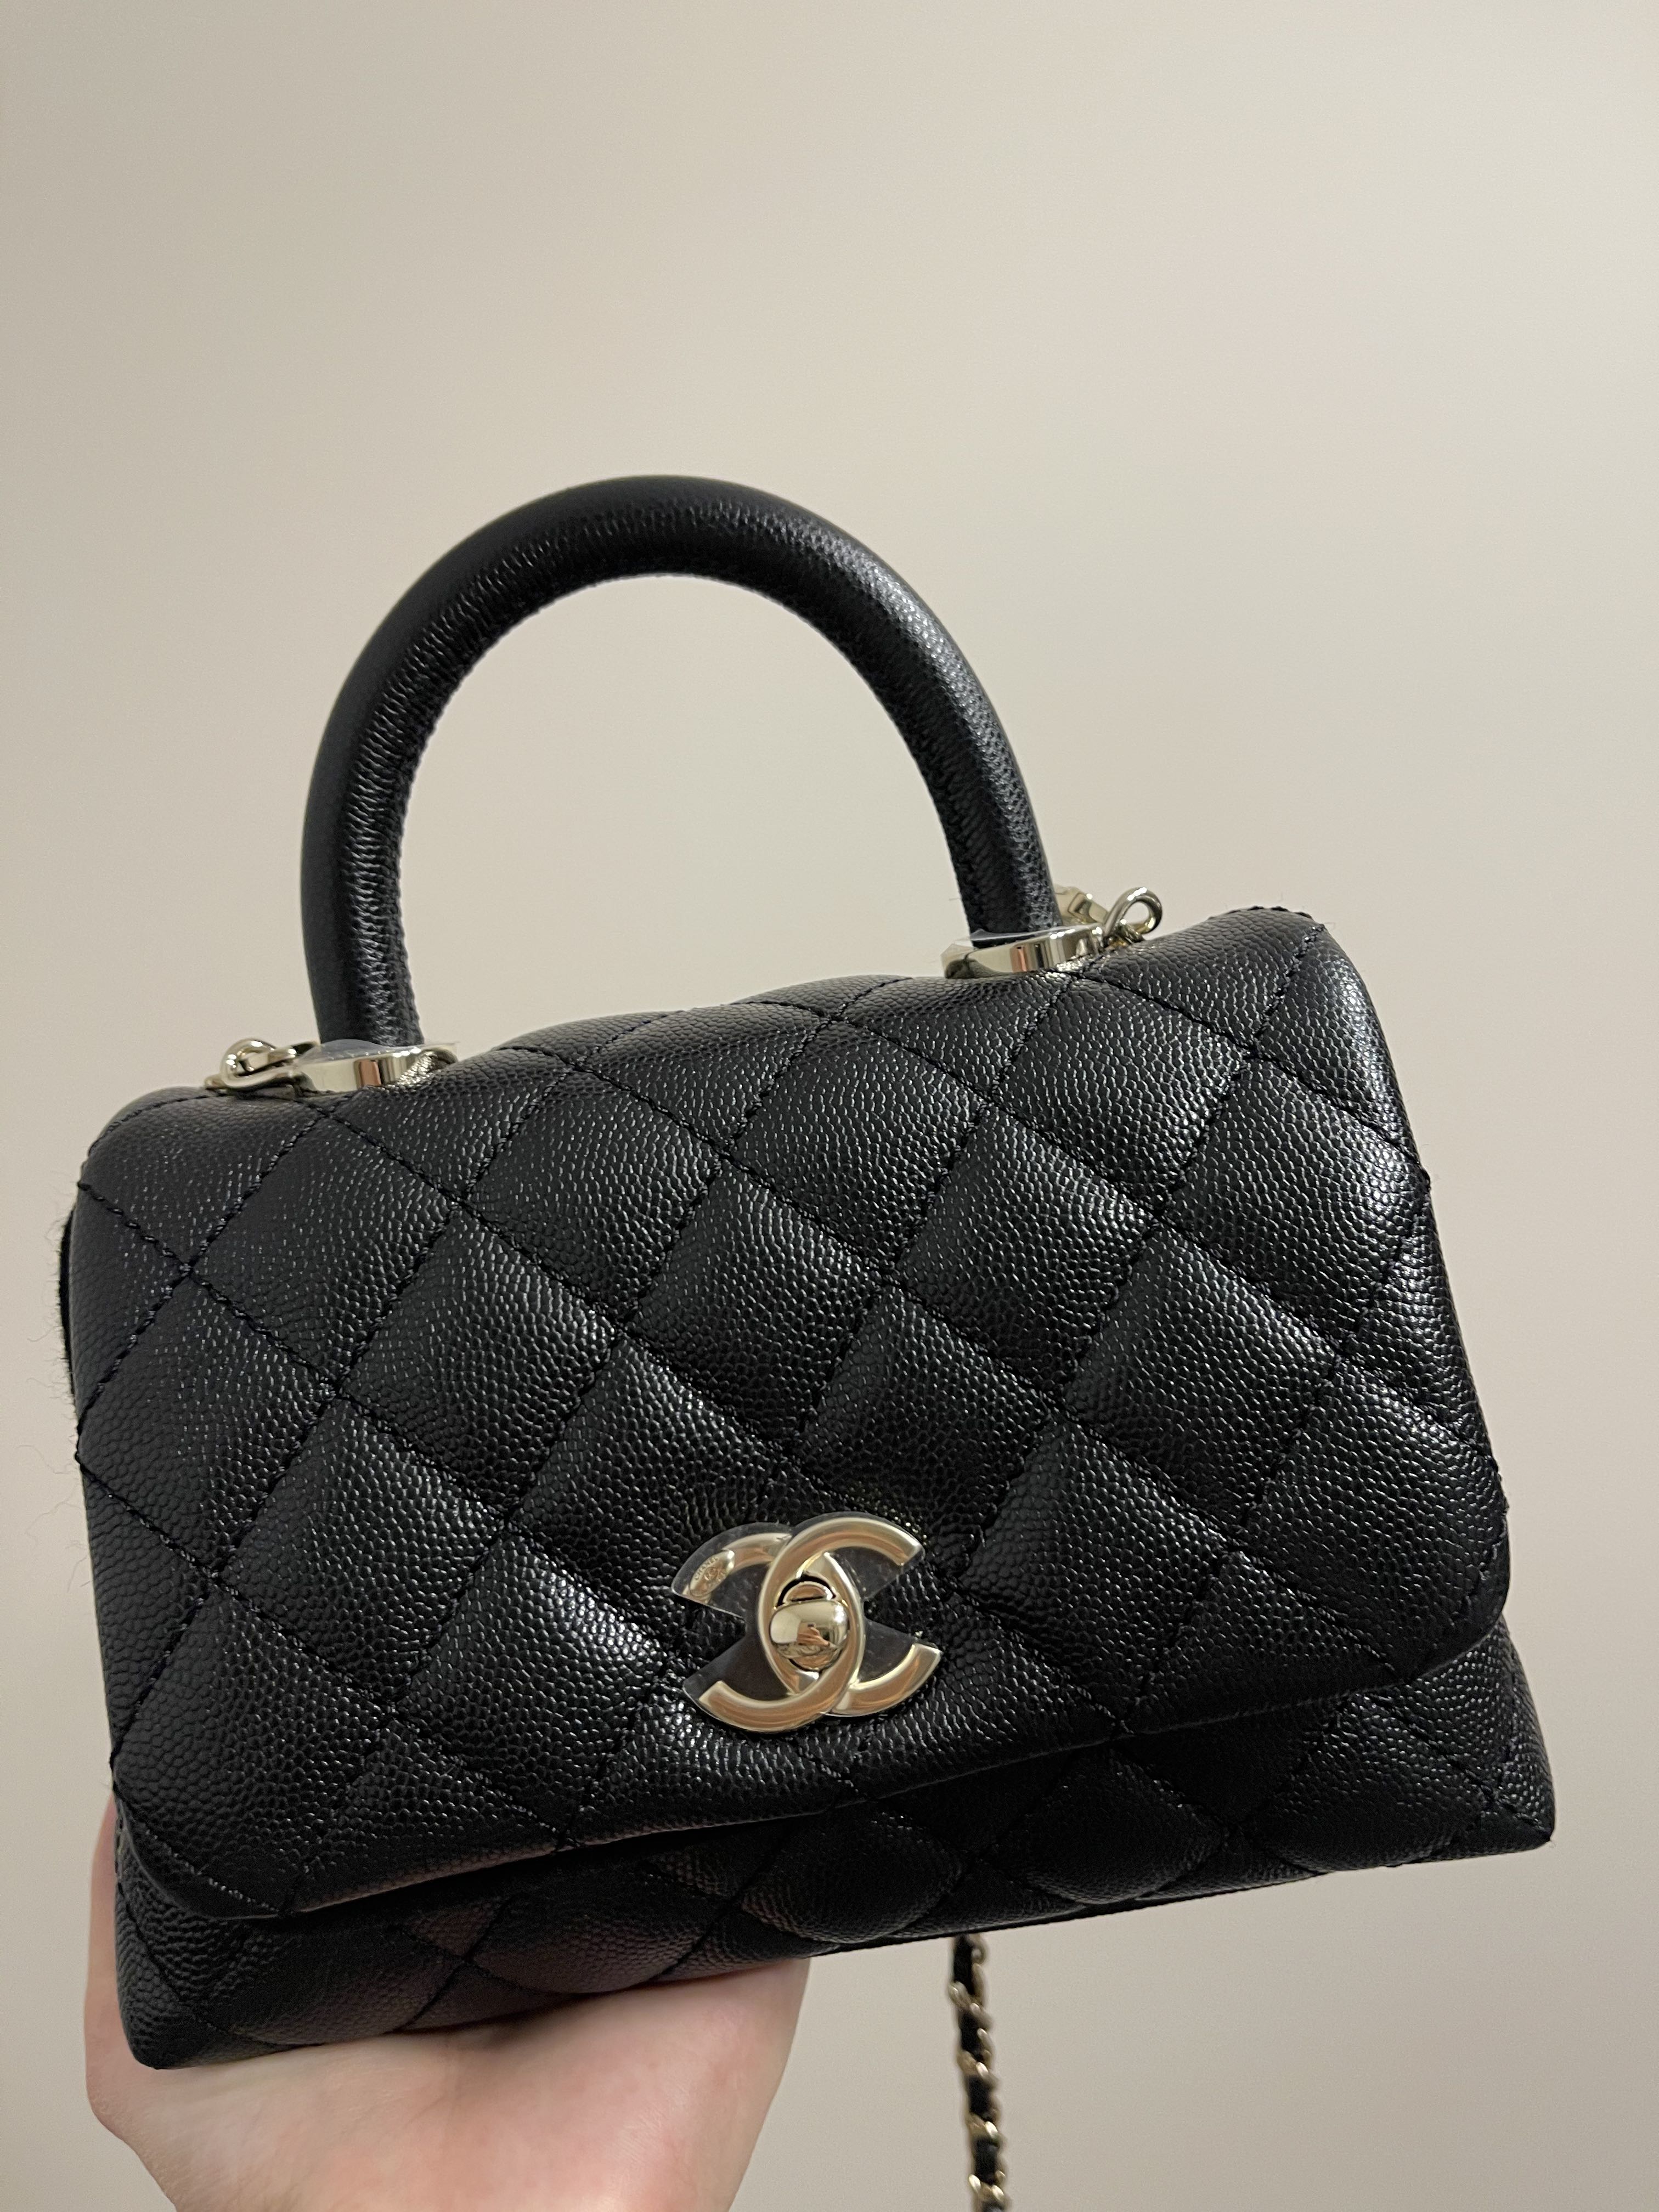 Chanel Mini Handbag Reviewed